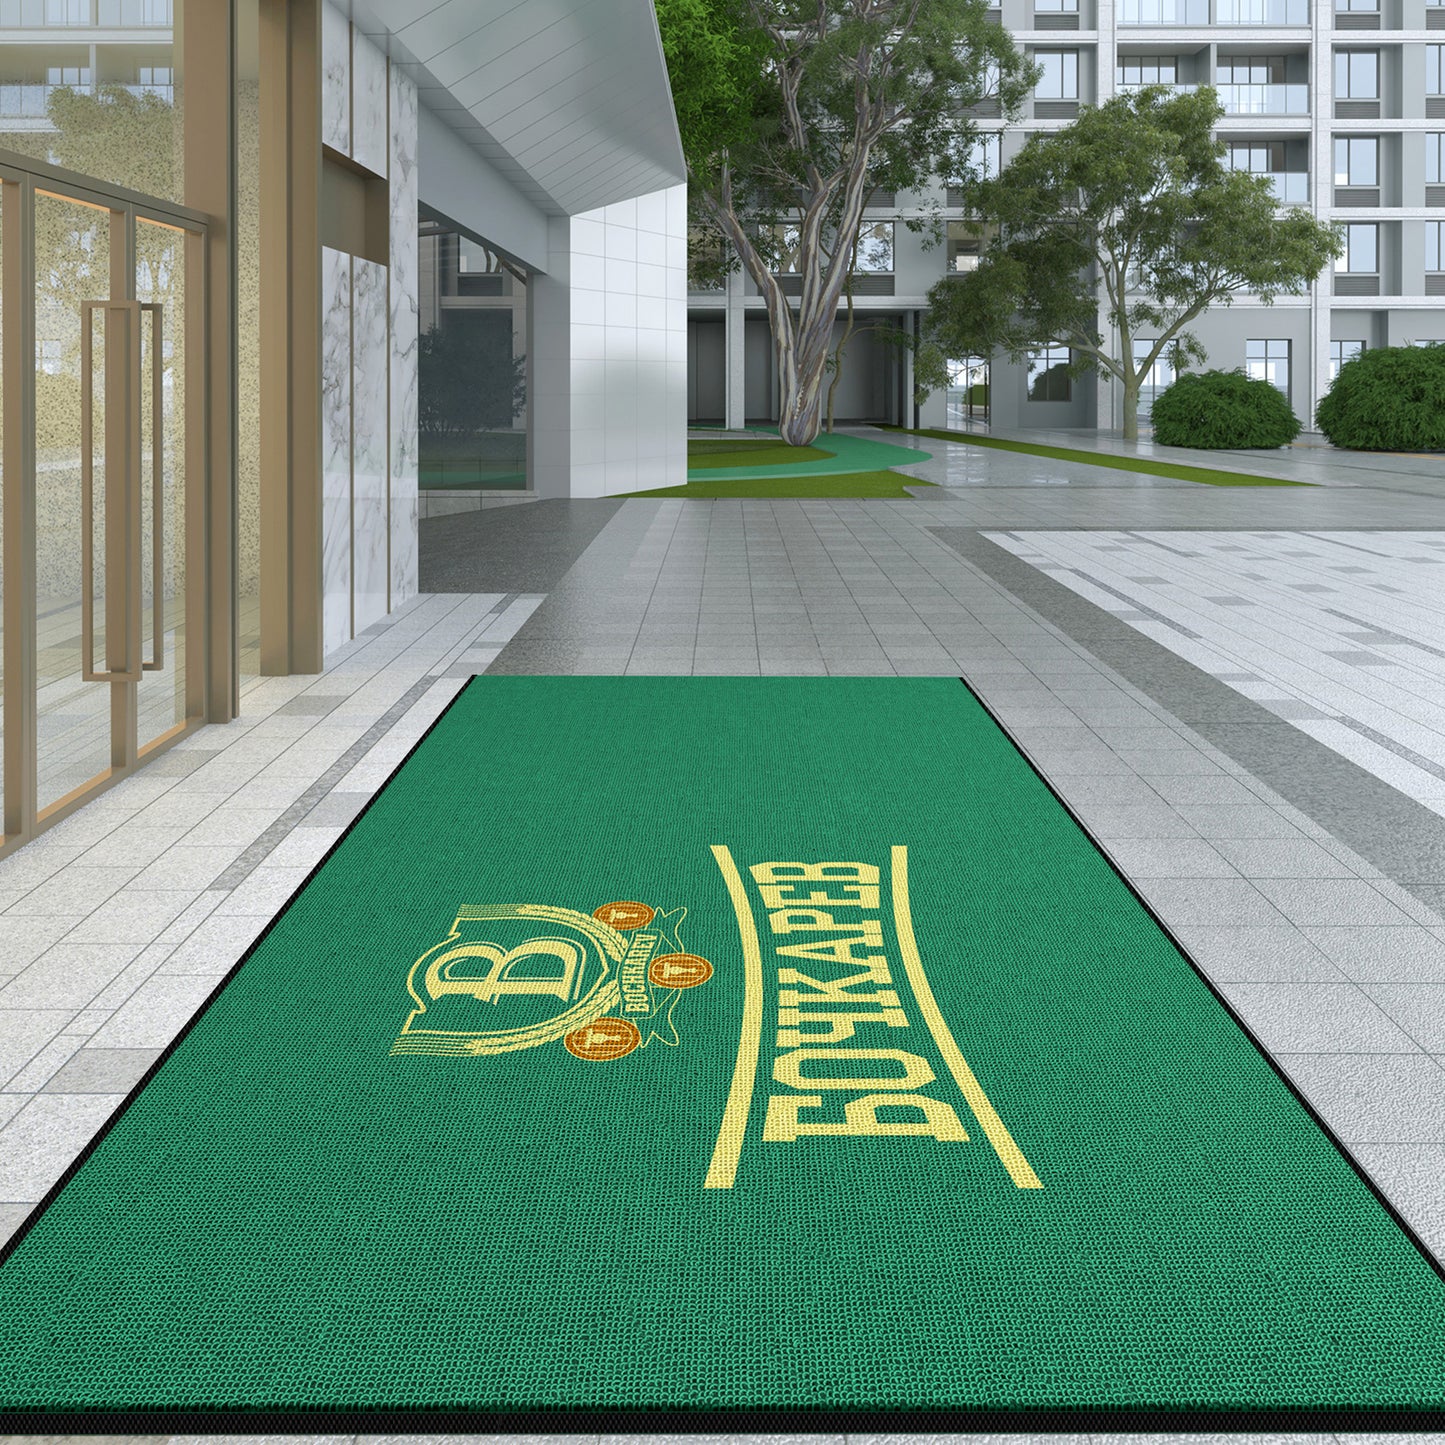 Custom Personalized Floor Mat Entryway Area Rugs Doormat Welcome Carpet for Home Business Indoor Outdoor Washable Ruggable Non Slip